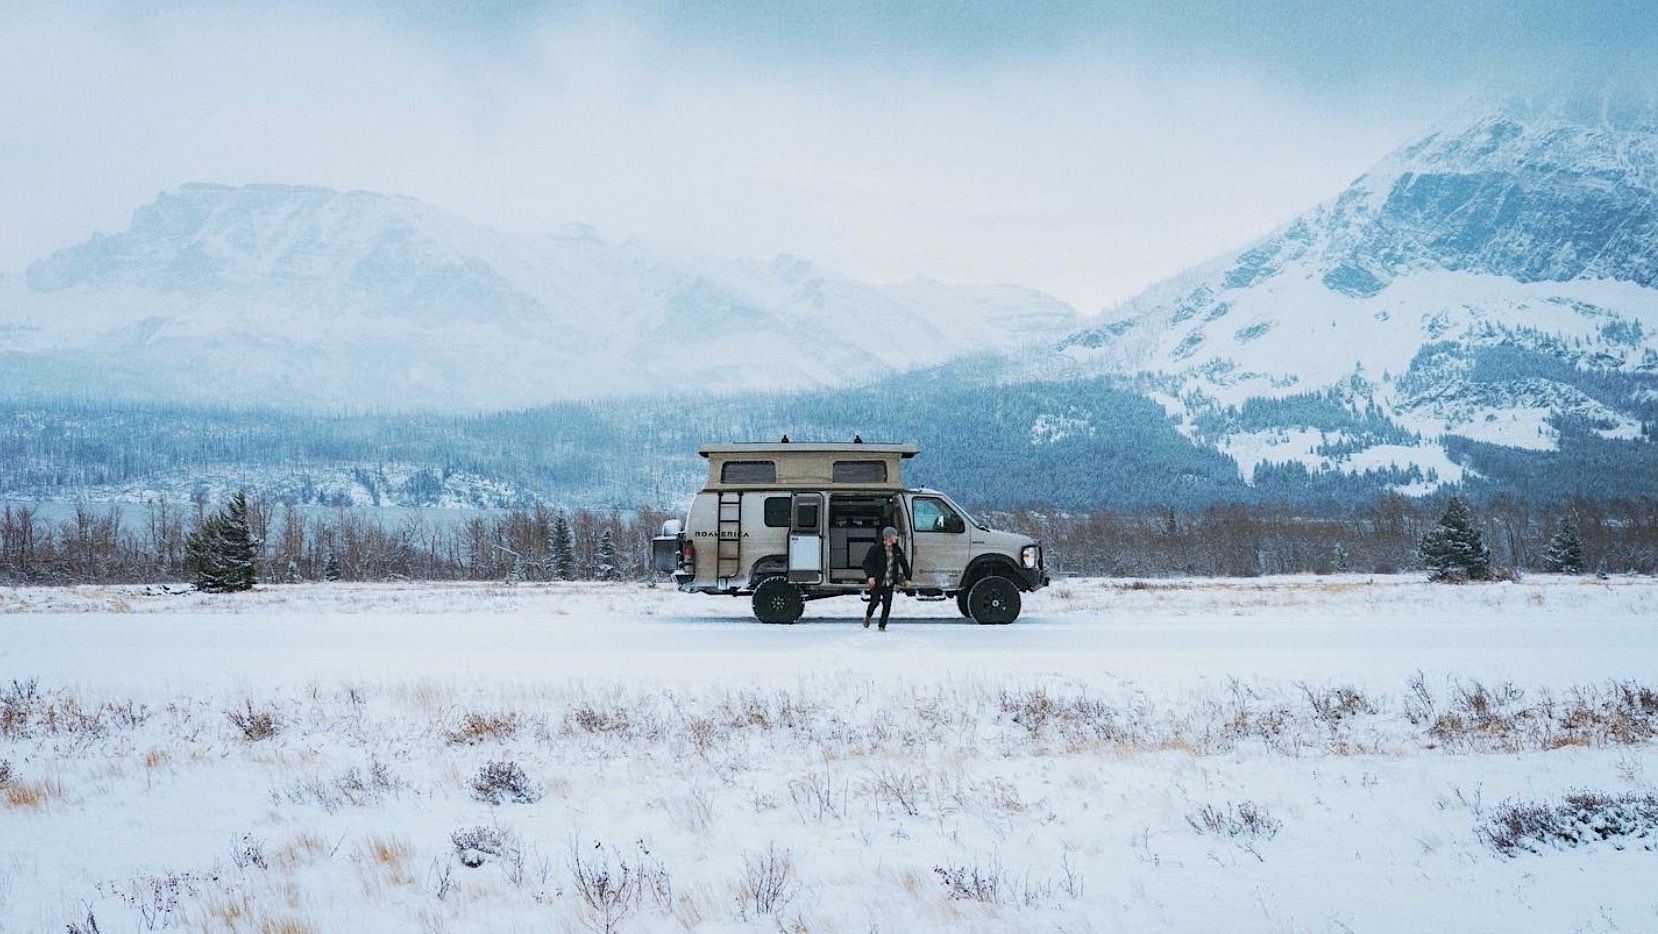 4x4 vans to rent for winter road trips